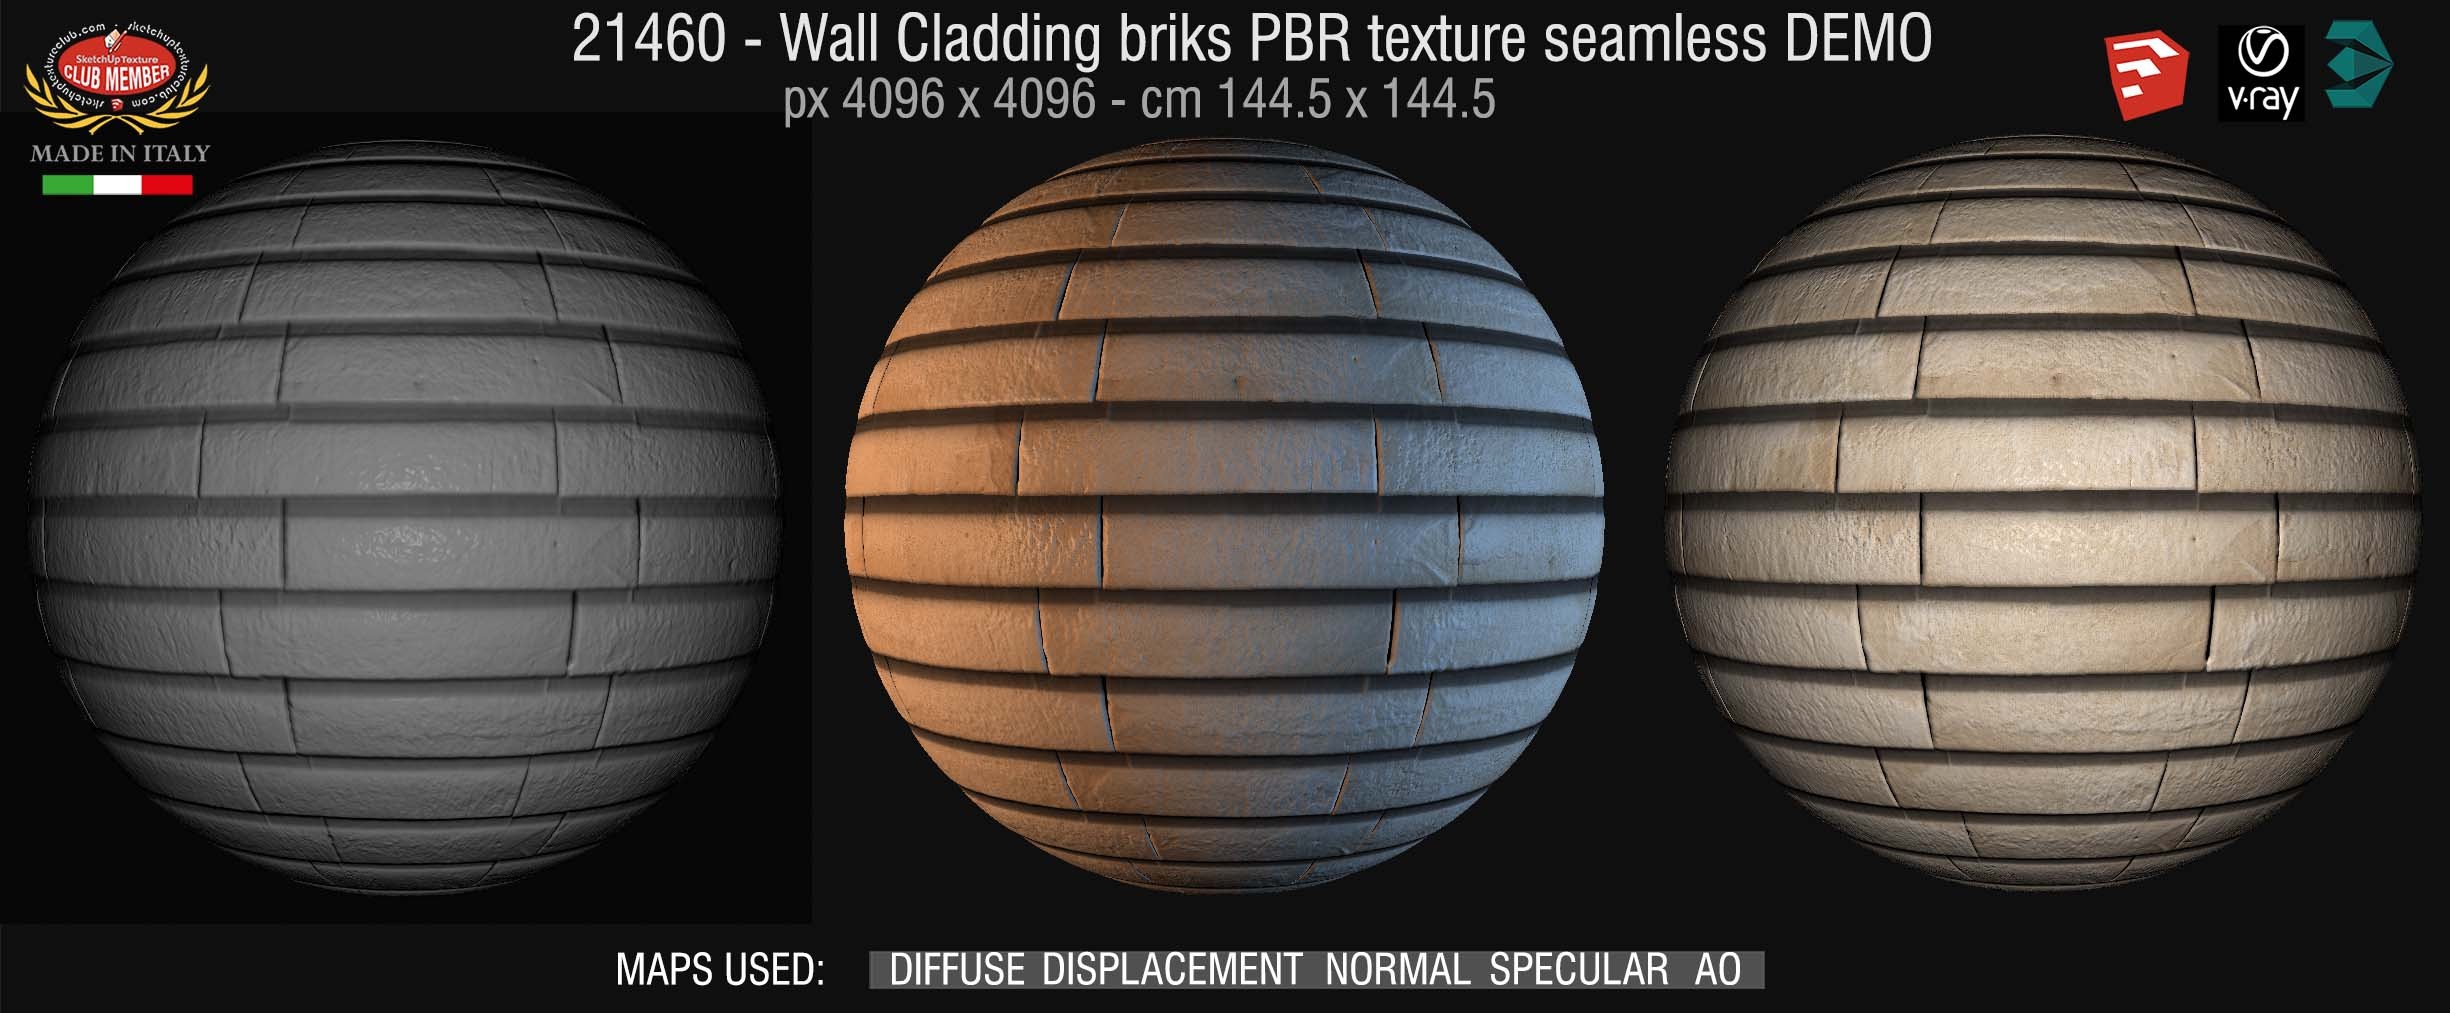 21460 Wall cladding bricks PBR texture seamless